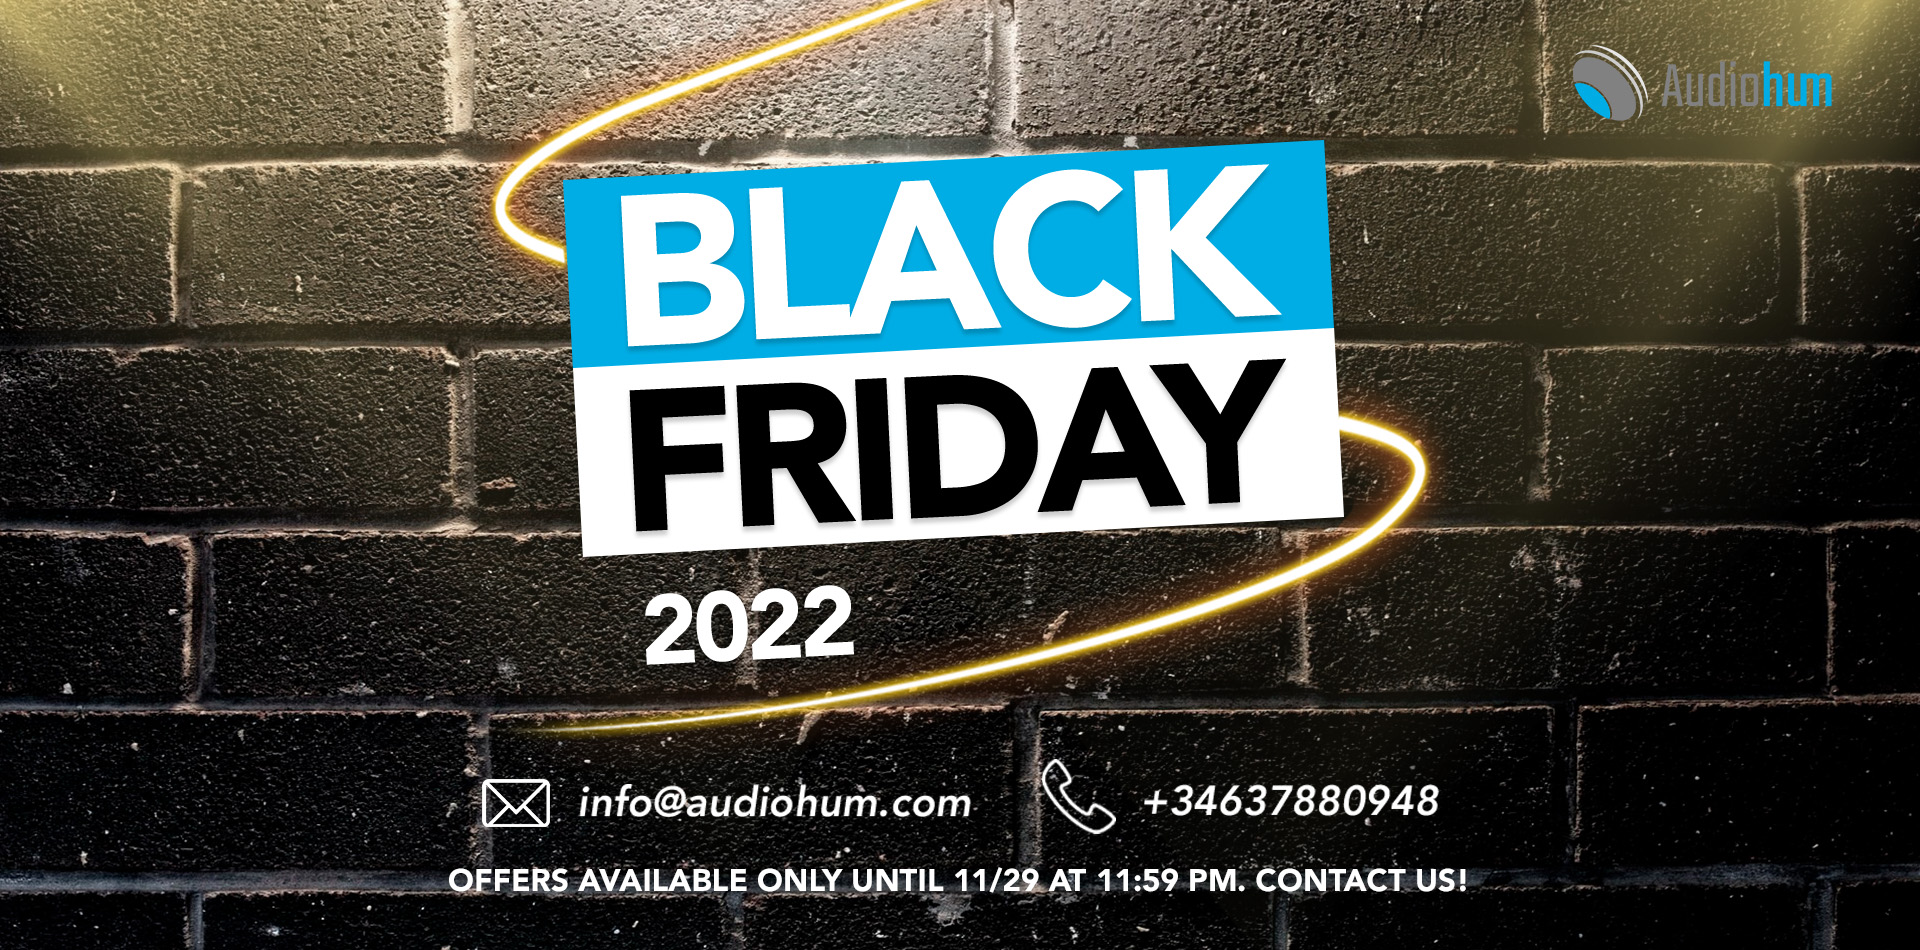 2022 Blackfriday discounts by Audiohum